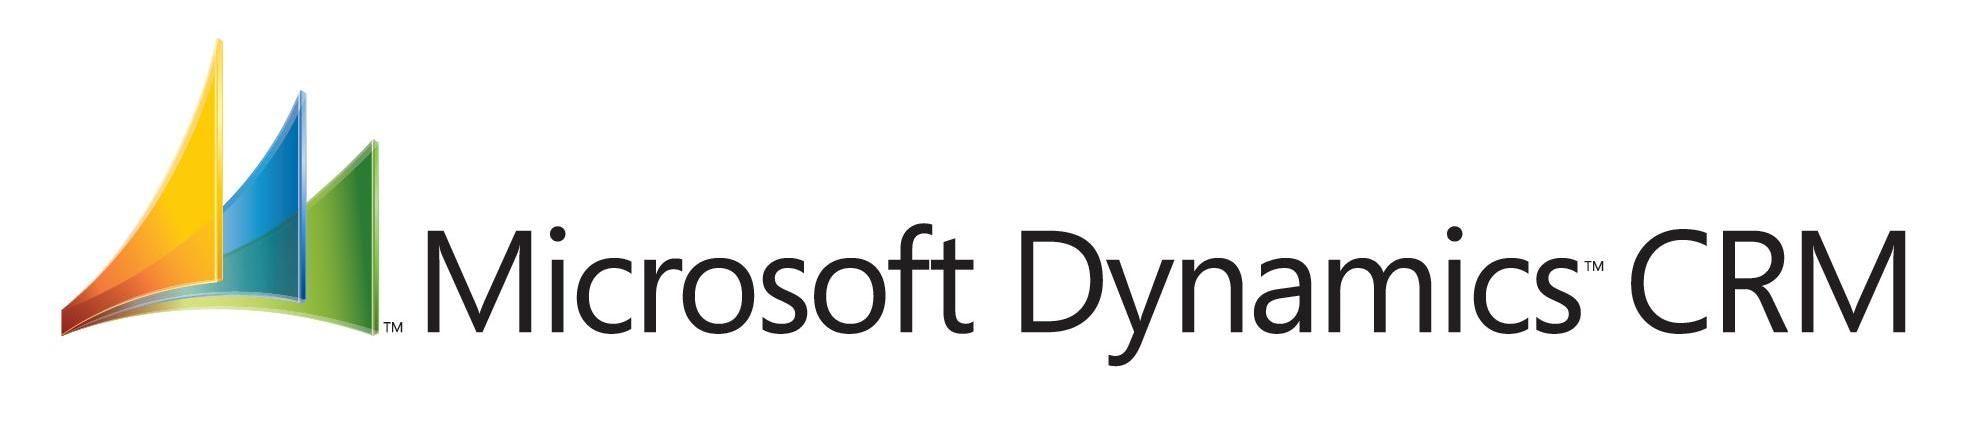 Dynamics CRM Logo - Microsoft Dynamics Customization & CRM Development | Techloyce